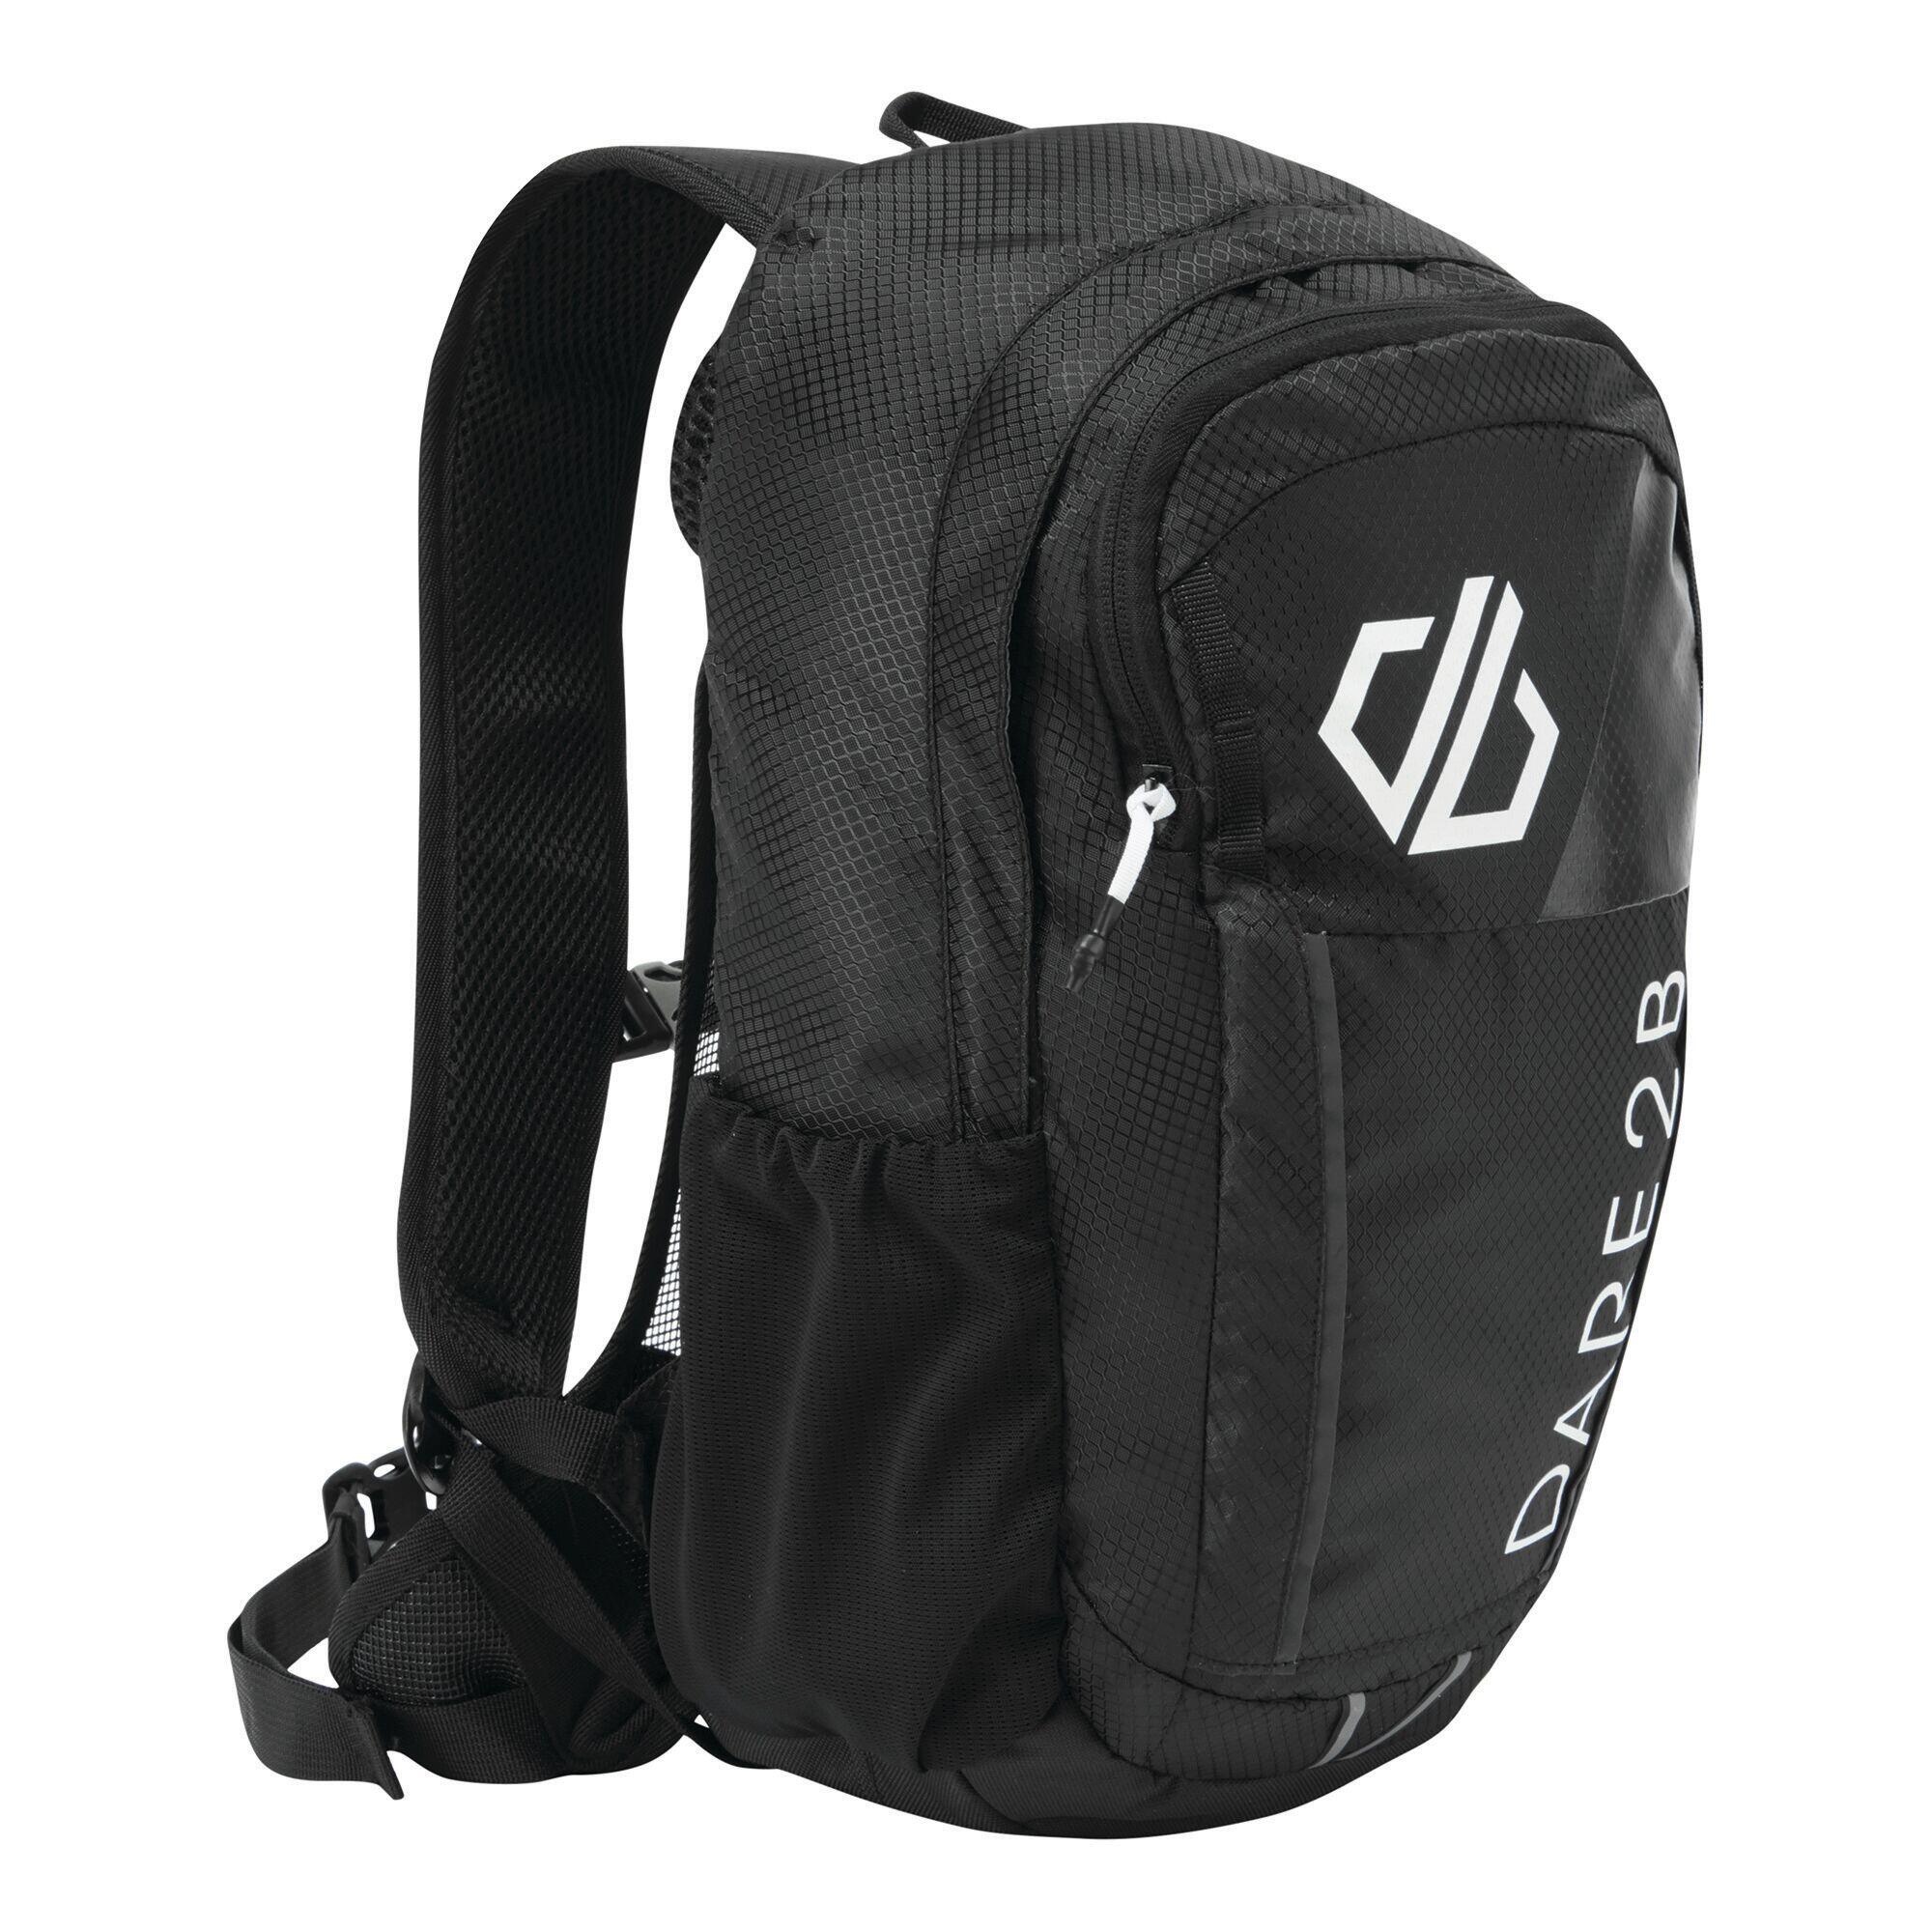 Vite Air Adults' Hiking 15 Litre Backpack - Black/White 2/4